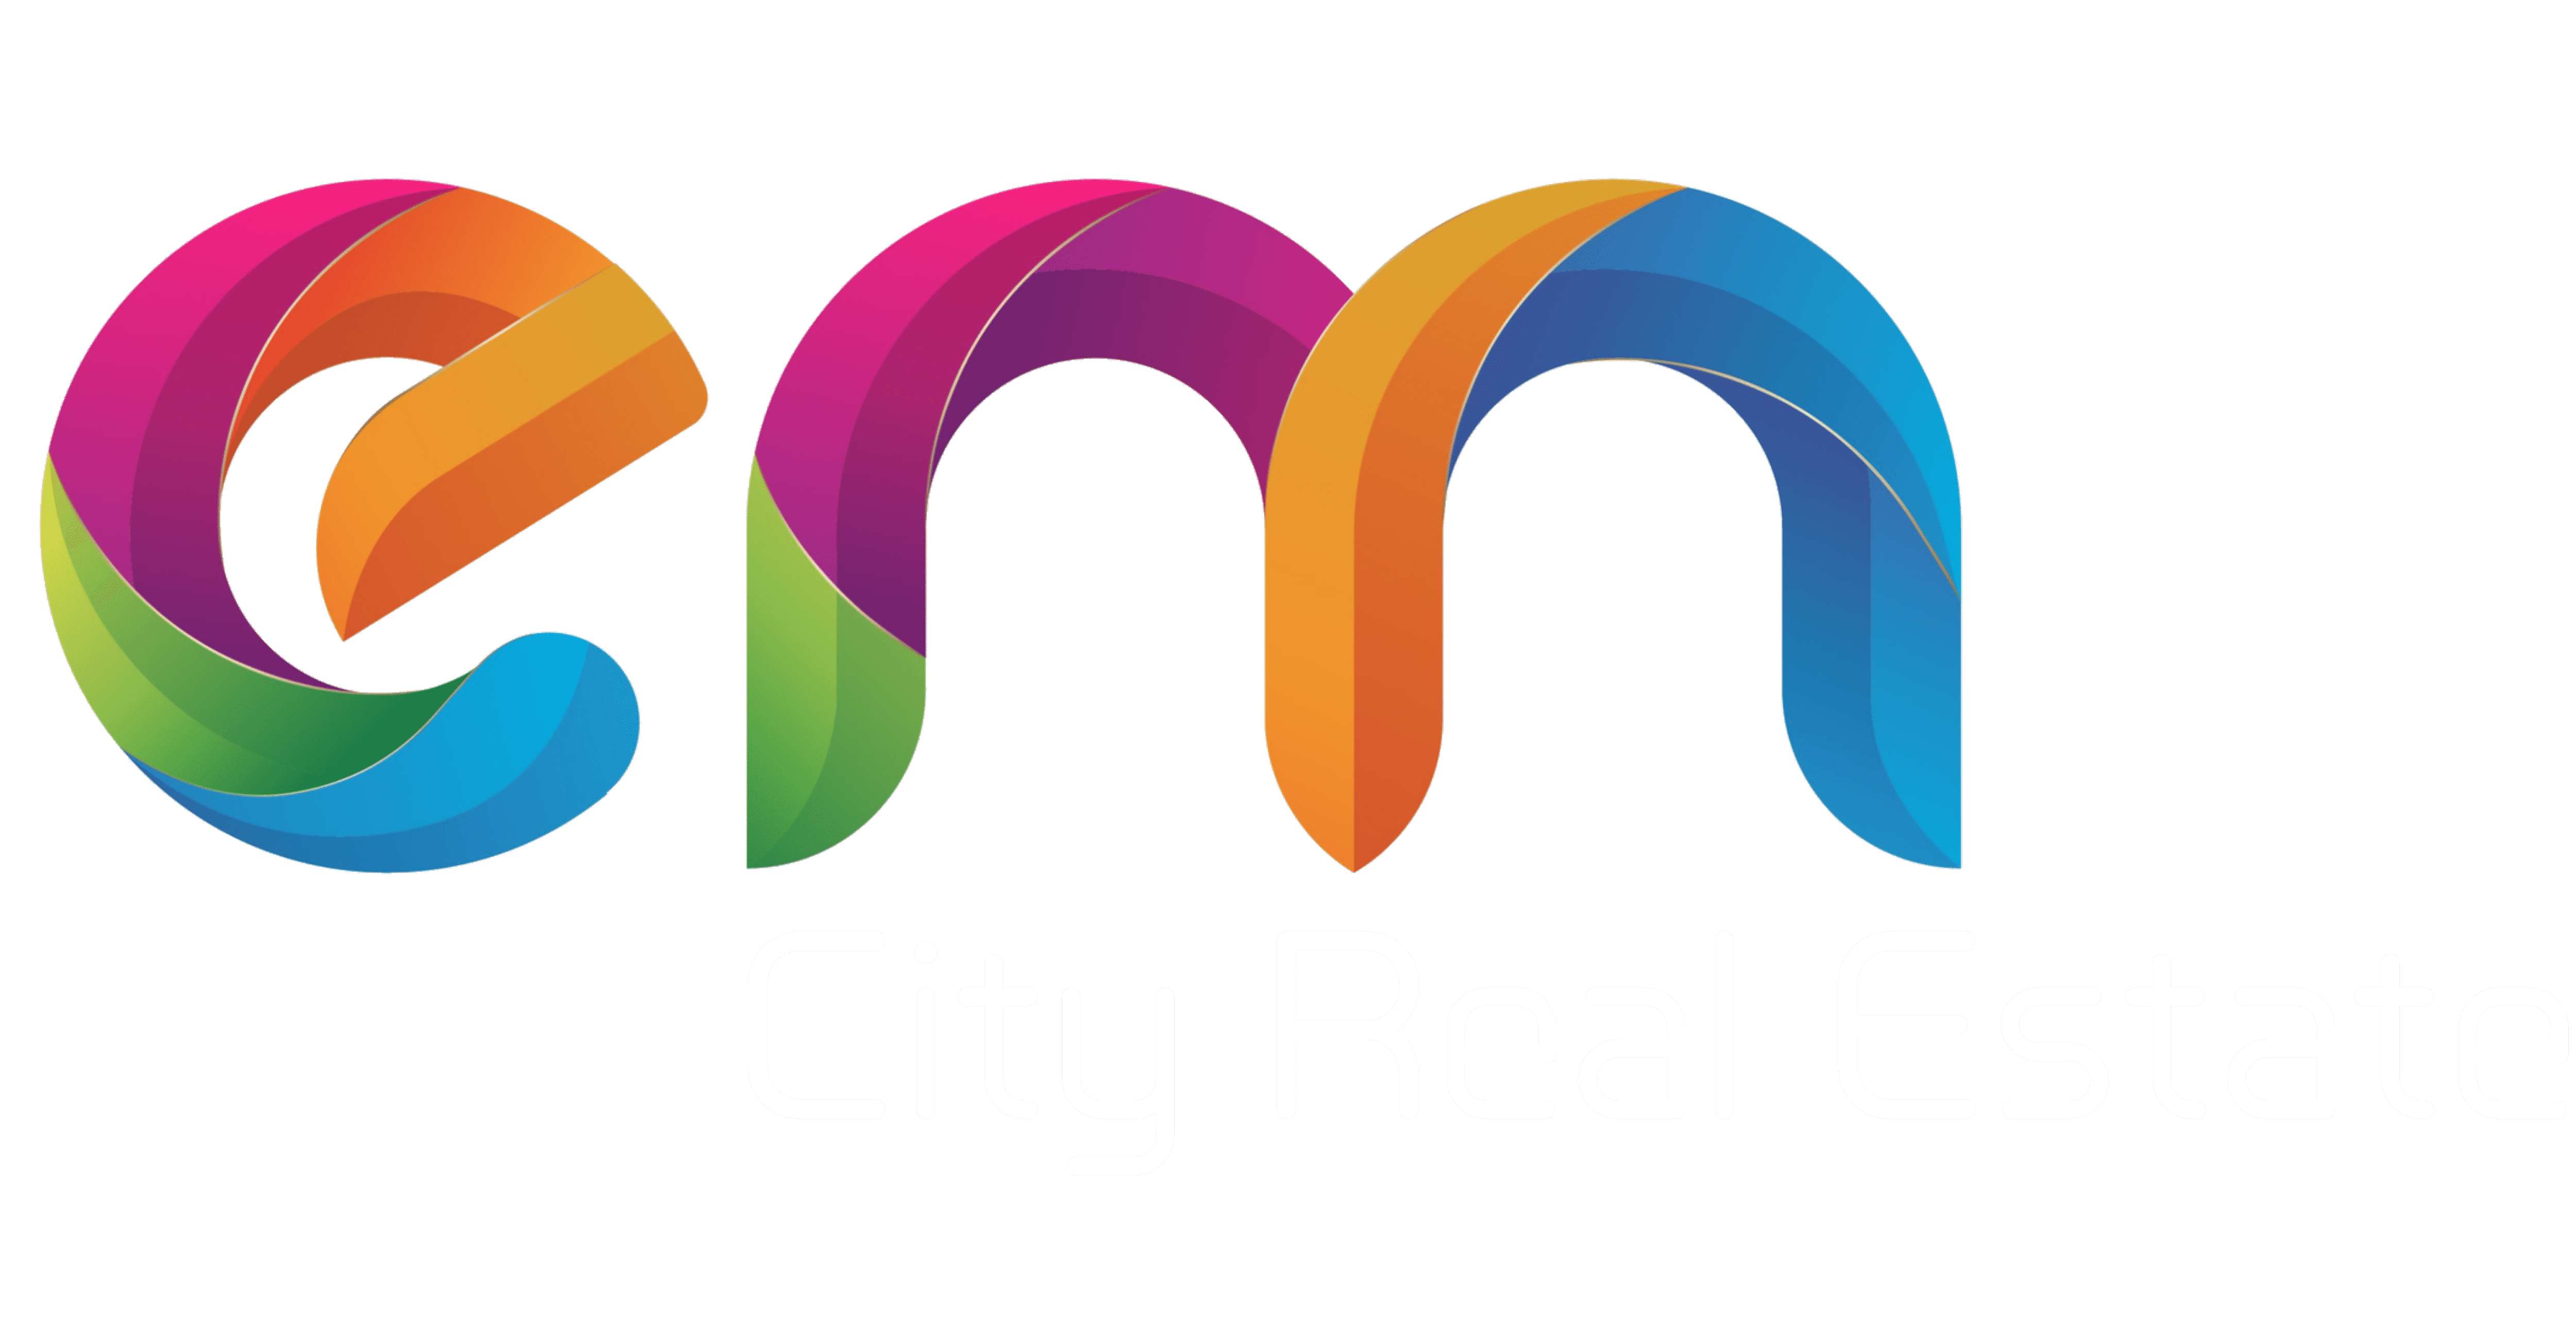 City Real Estate (3) (1)